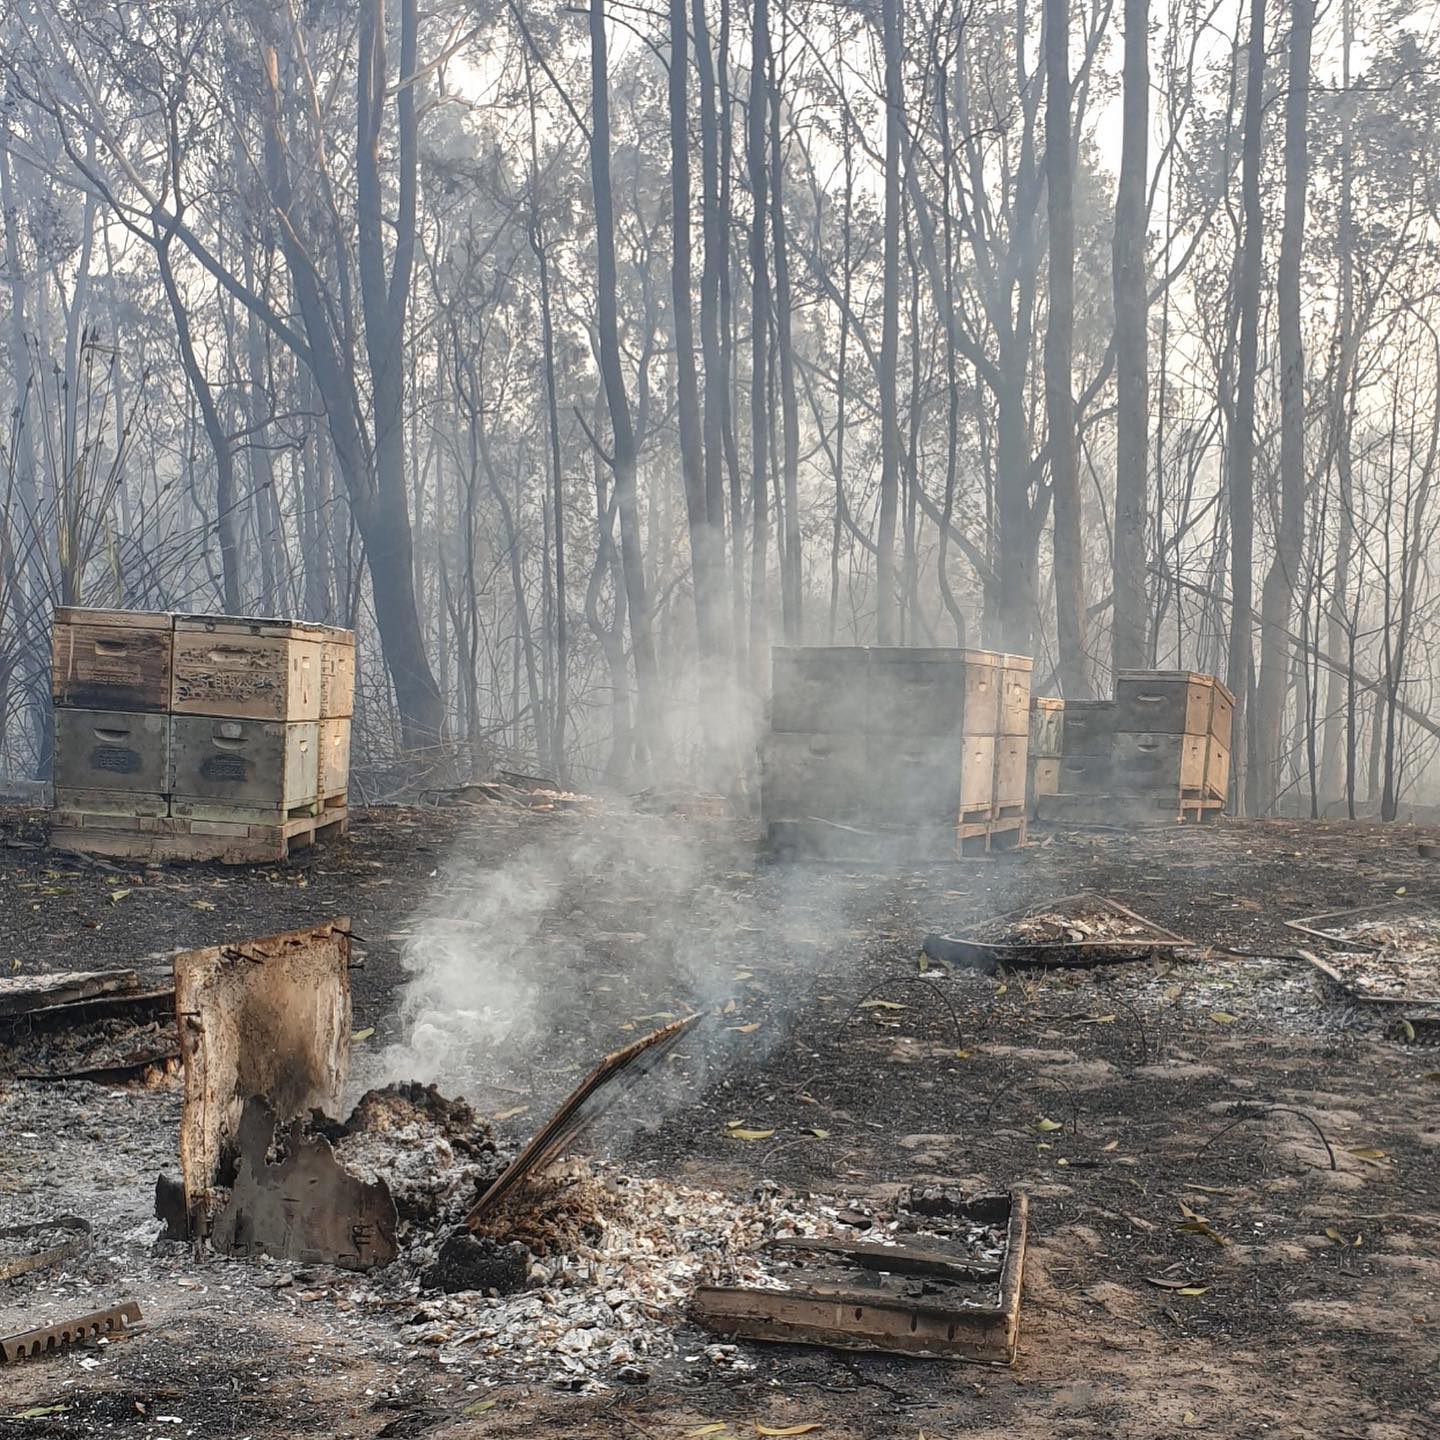 bushfires capilanohoney